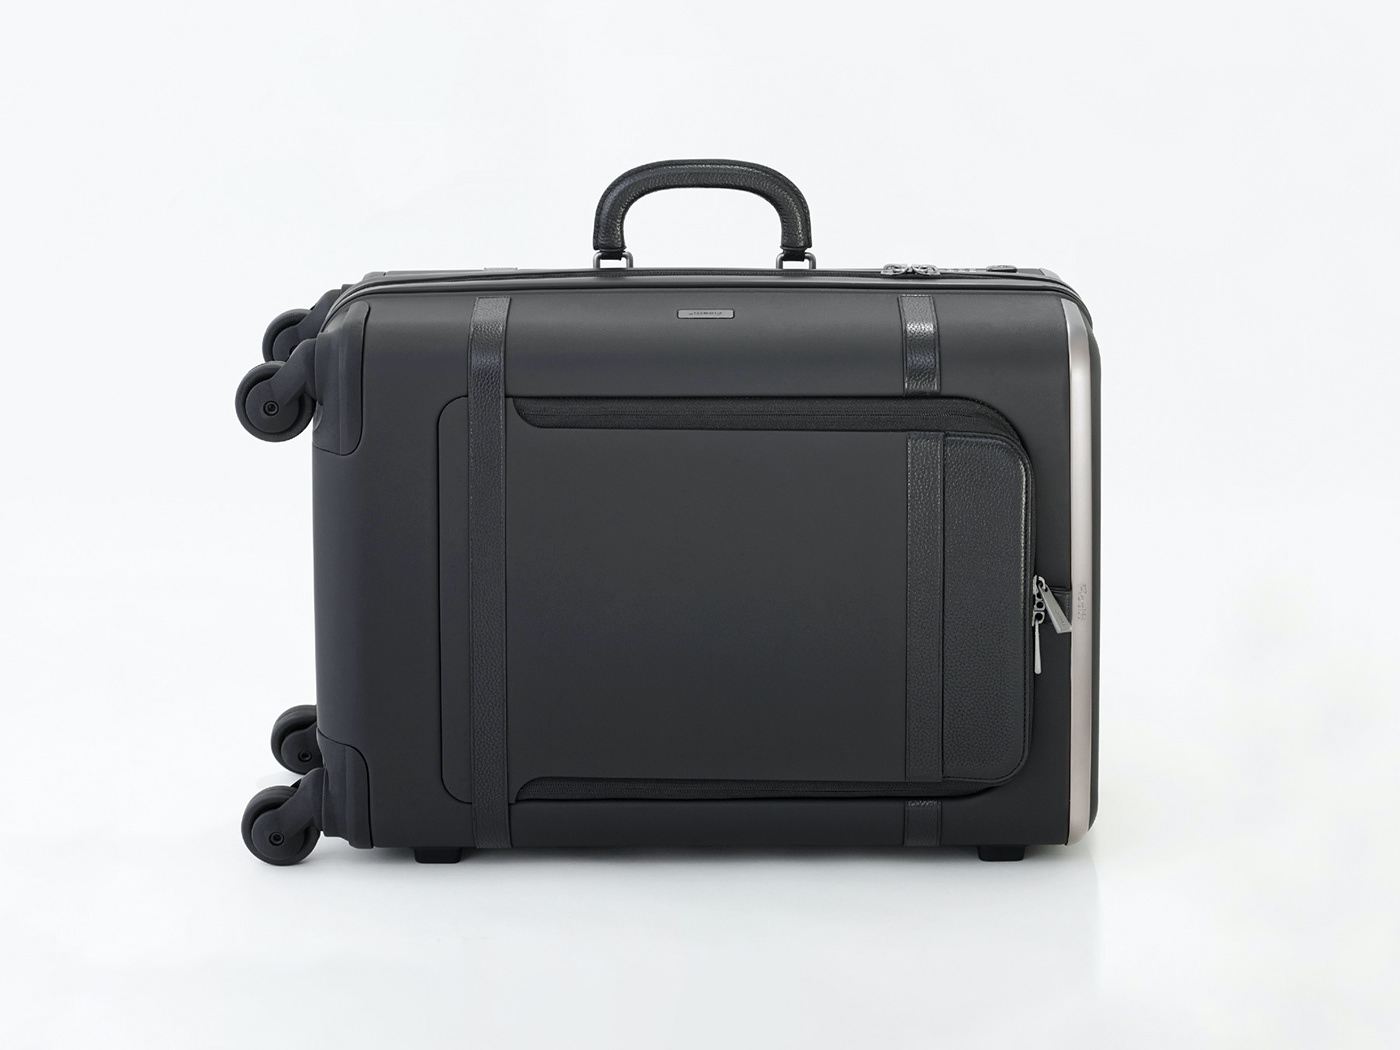 andrea ponti Floatti Smart suitcase Kickstarter luggage bag Travel leather polycarbonate design product industrial